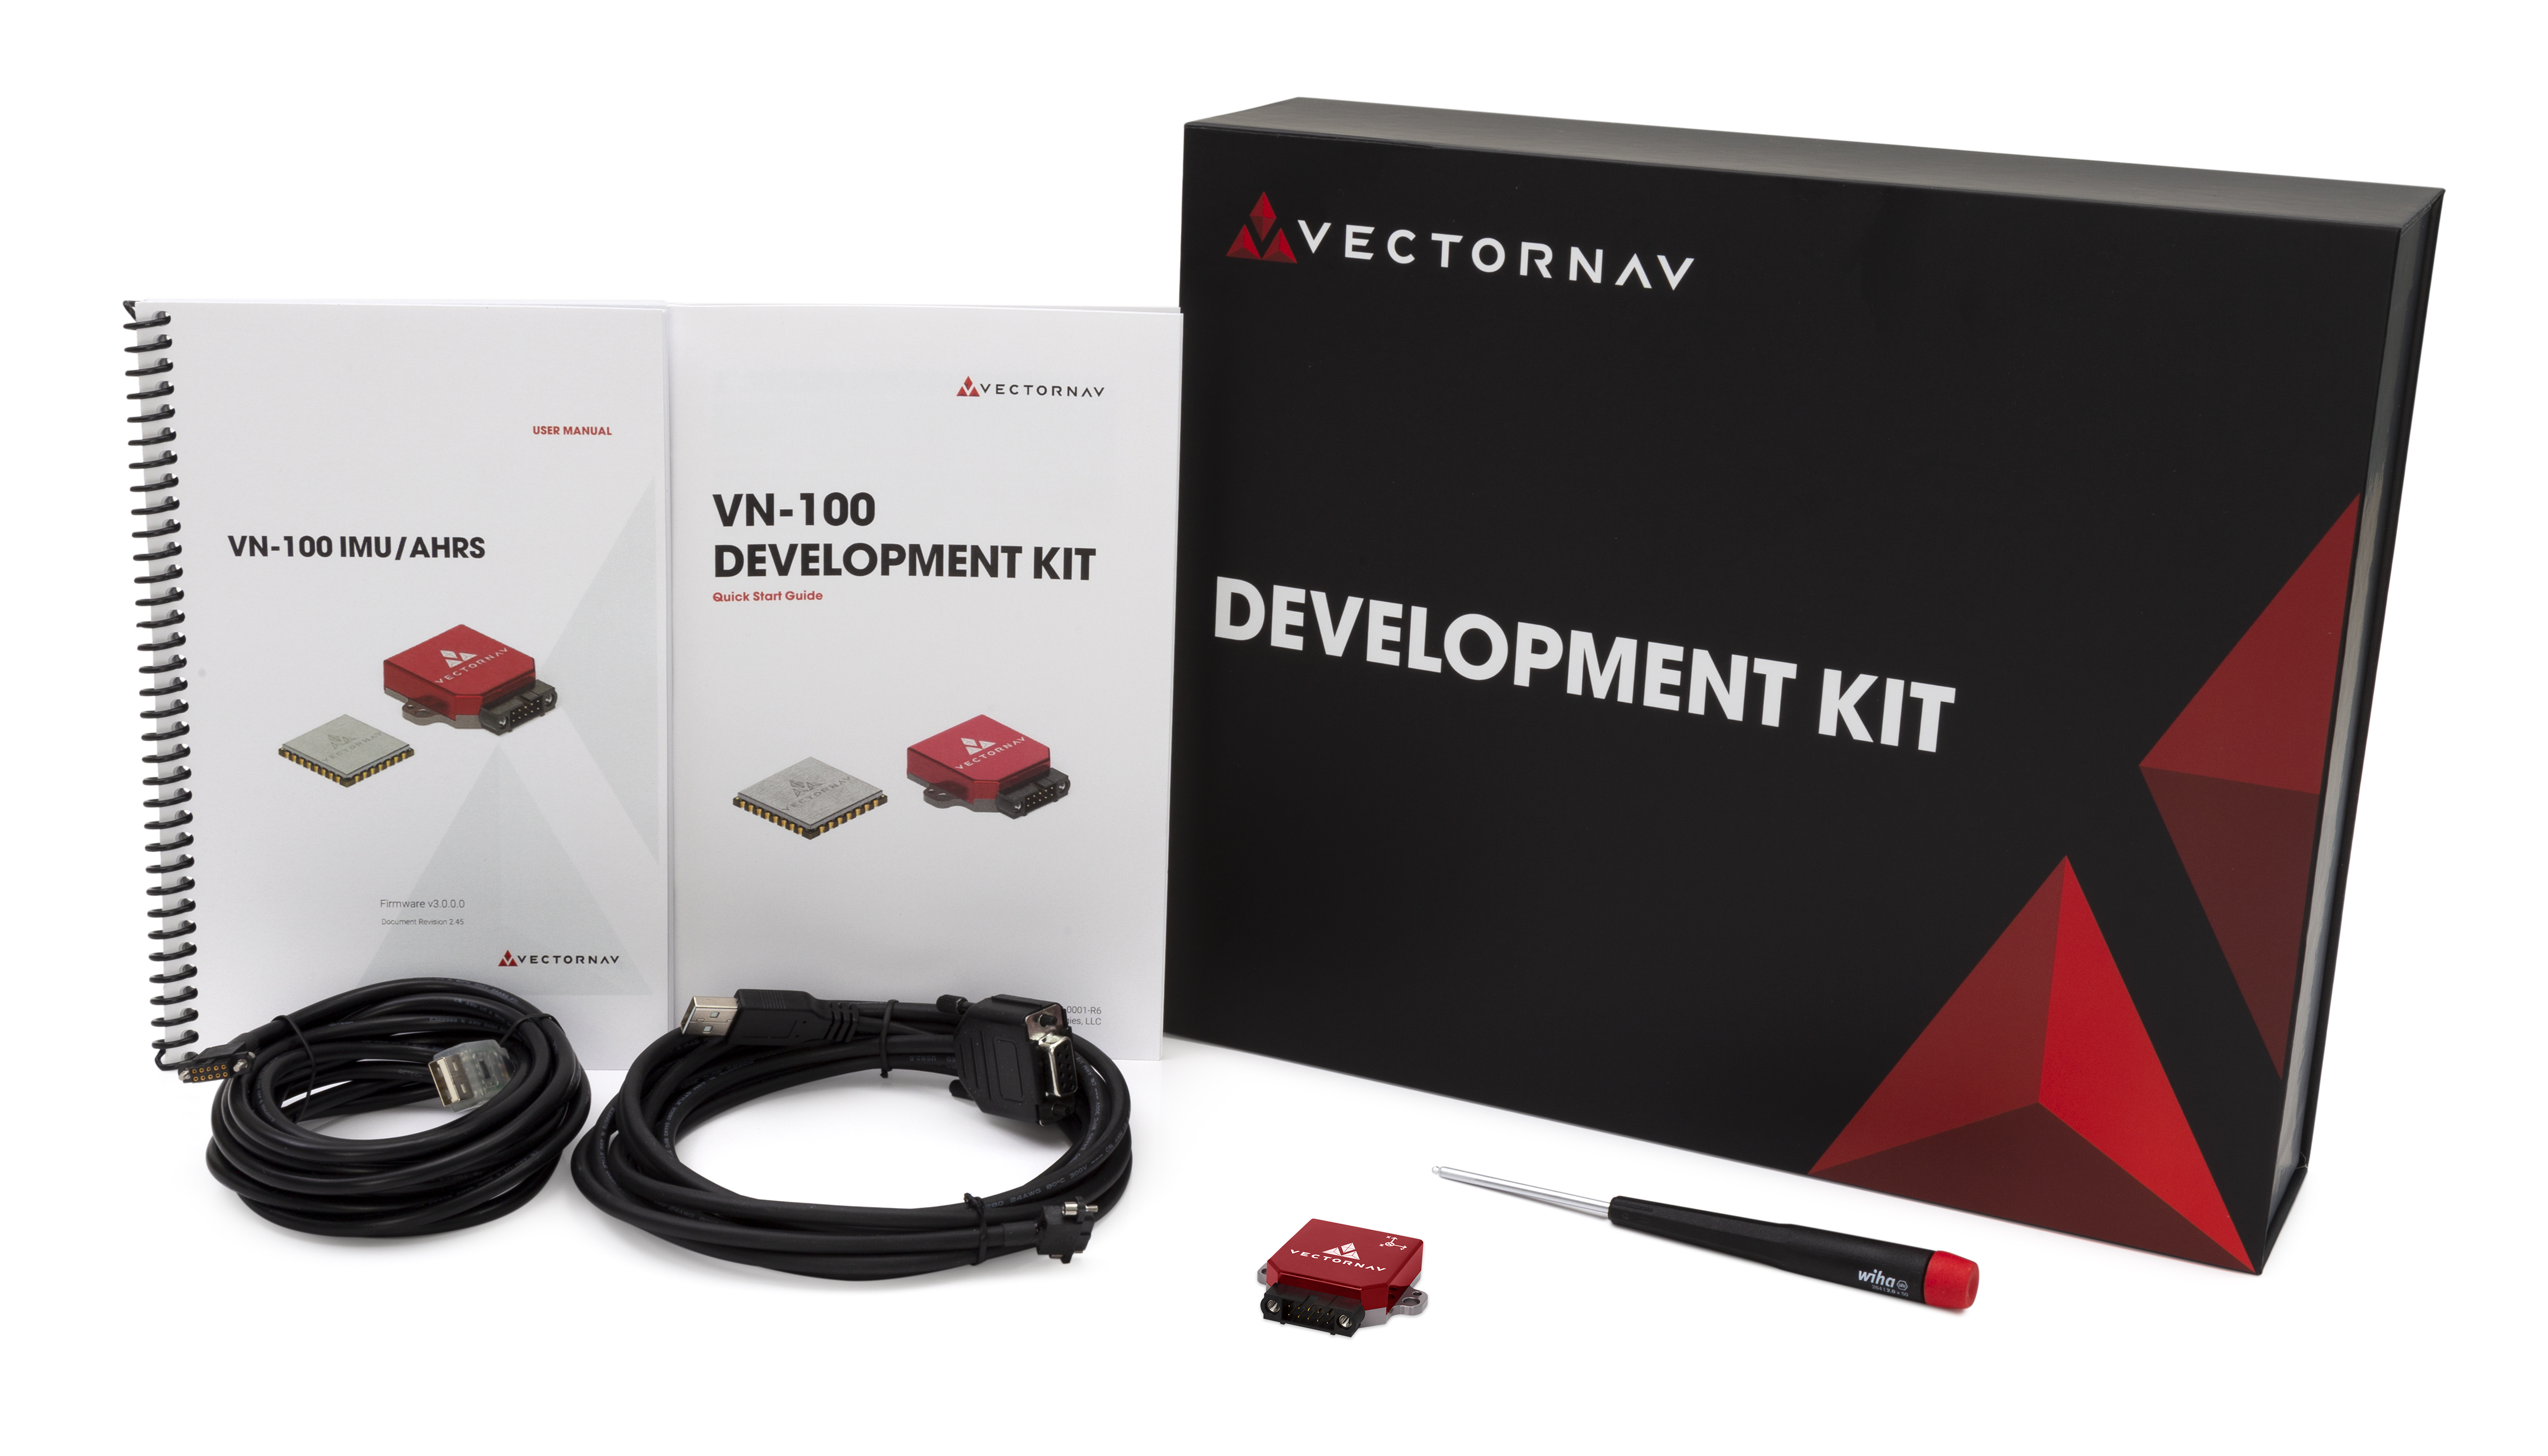 VN-100 Rugged Development Kit